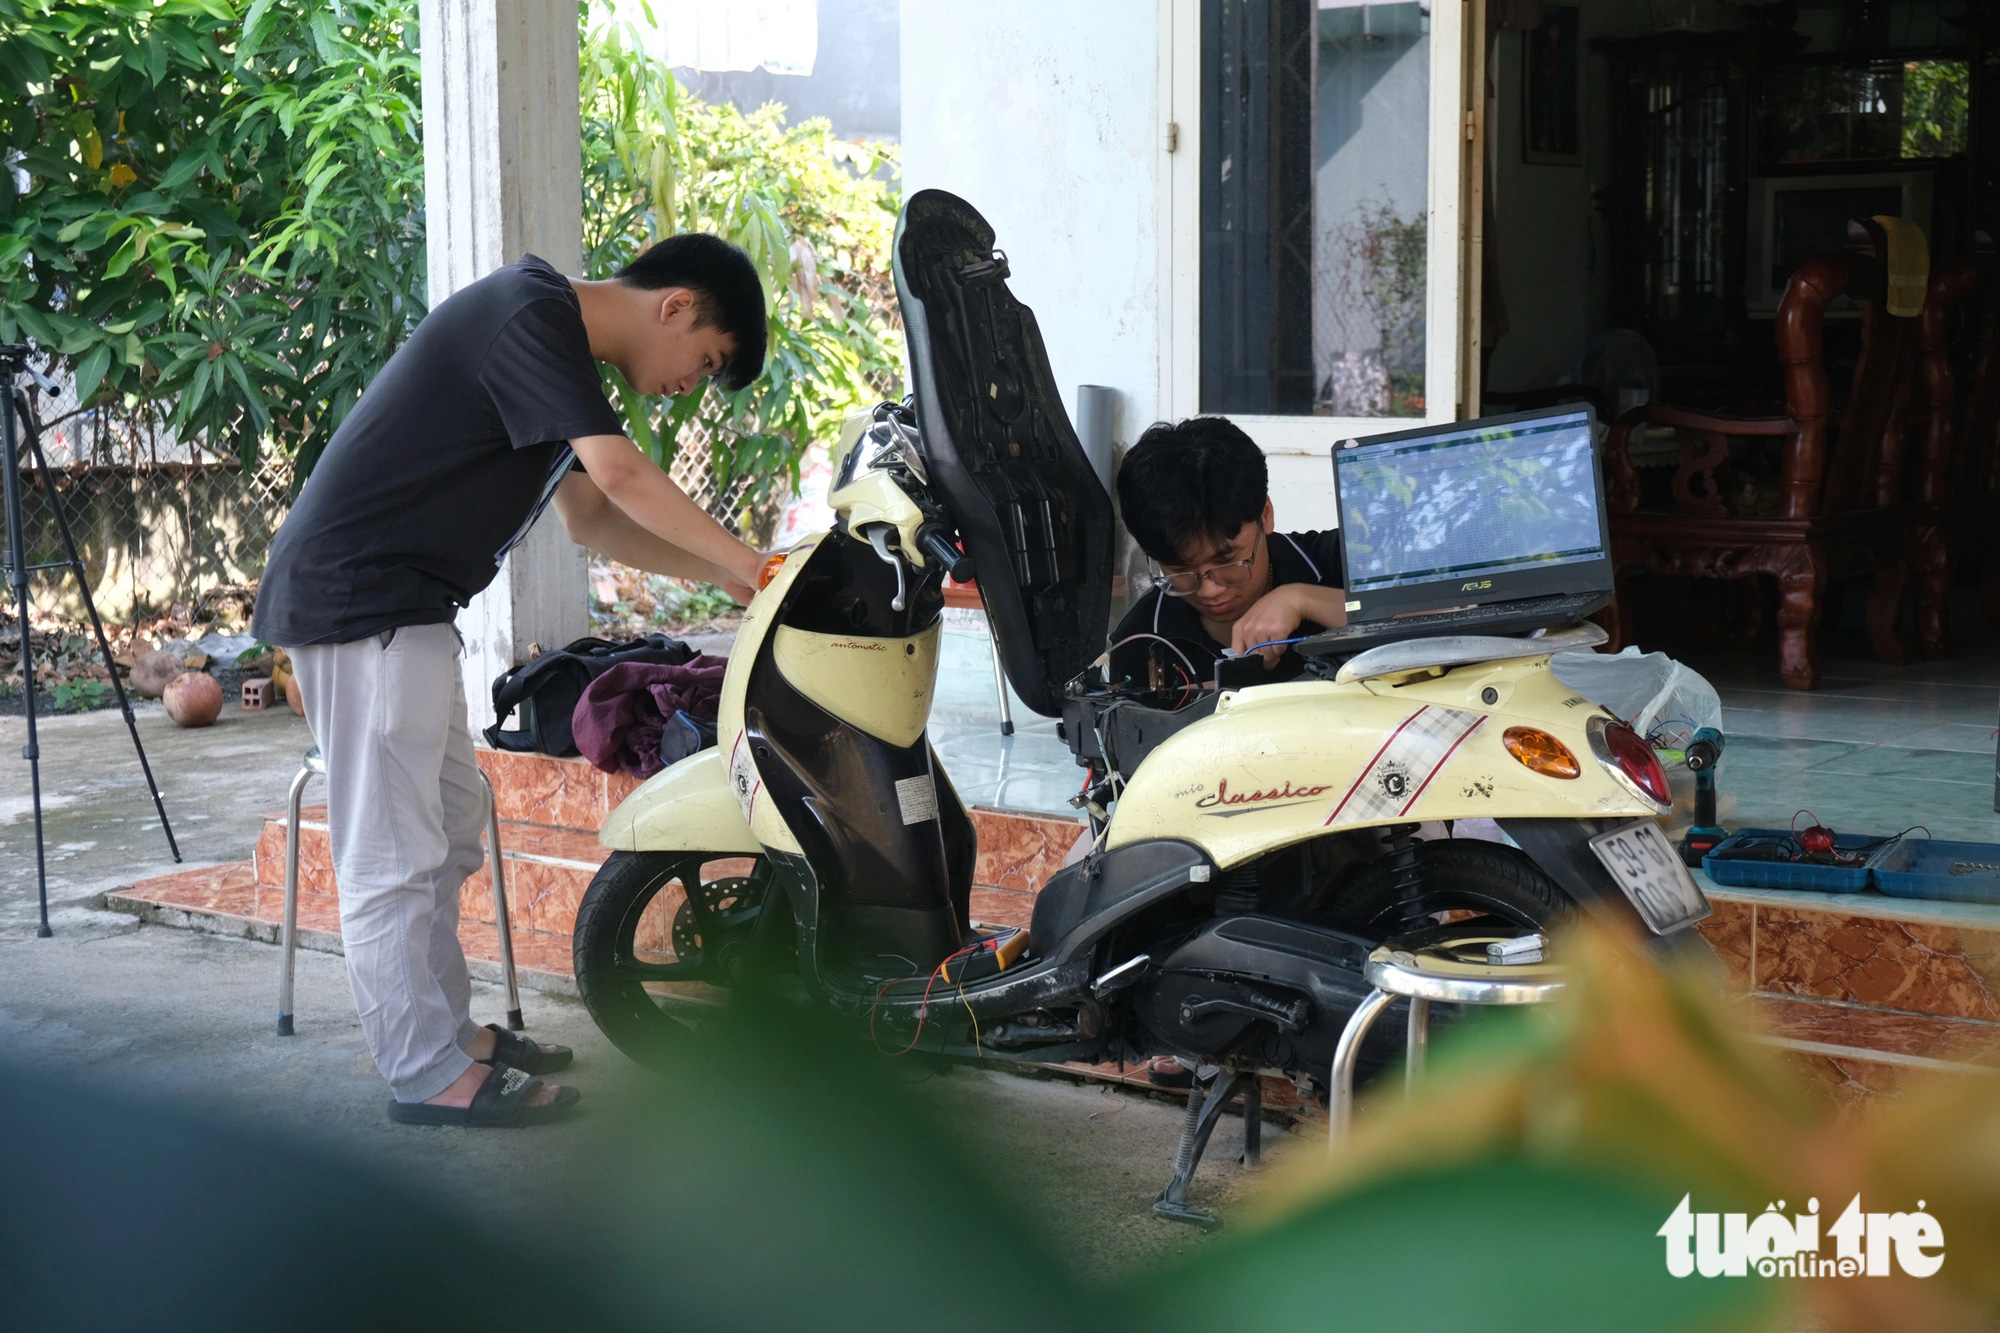 Parking panic solved? Students design fire-prevention system for Vietnam's beloved bikes